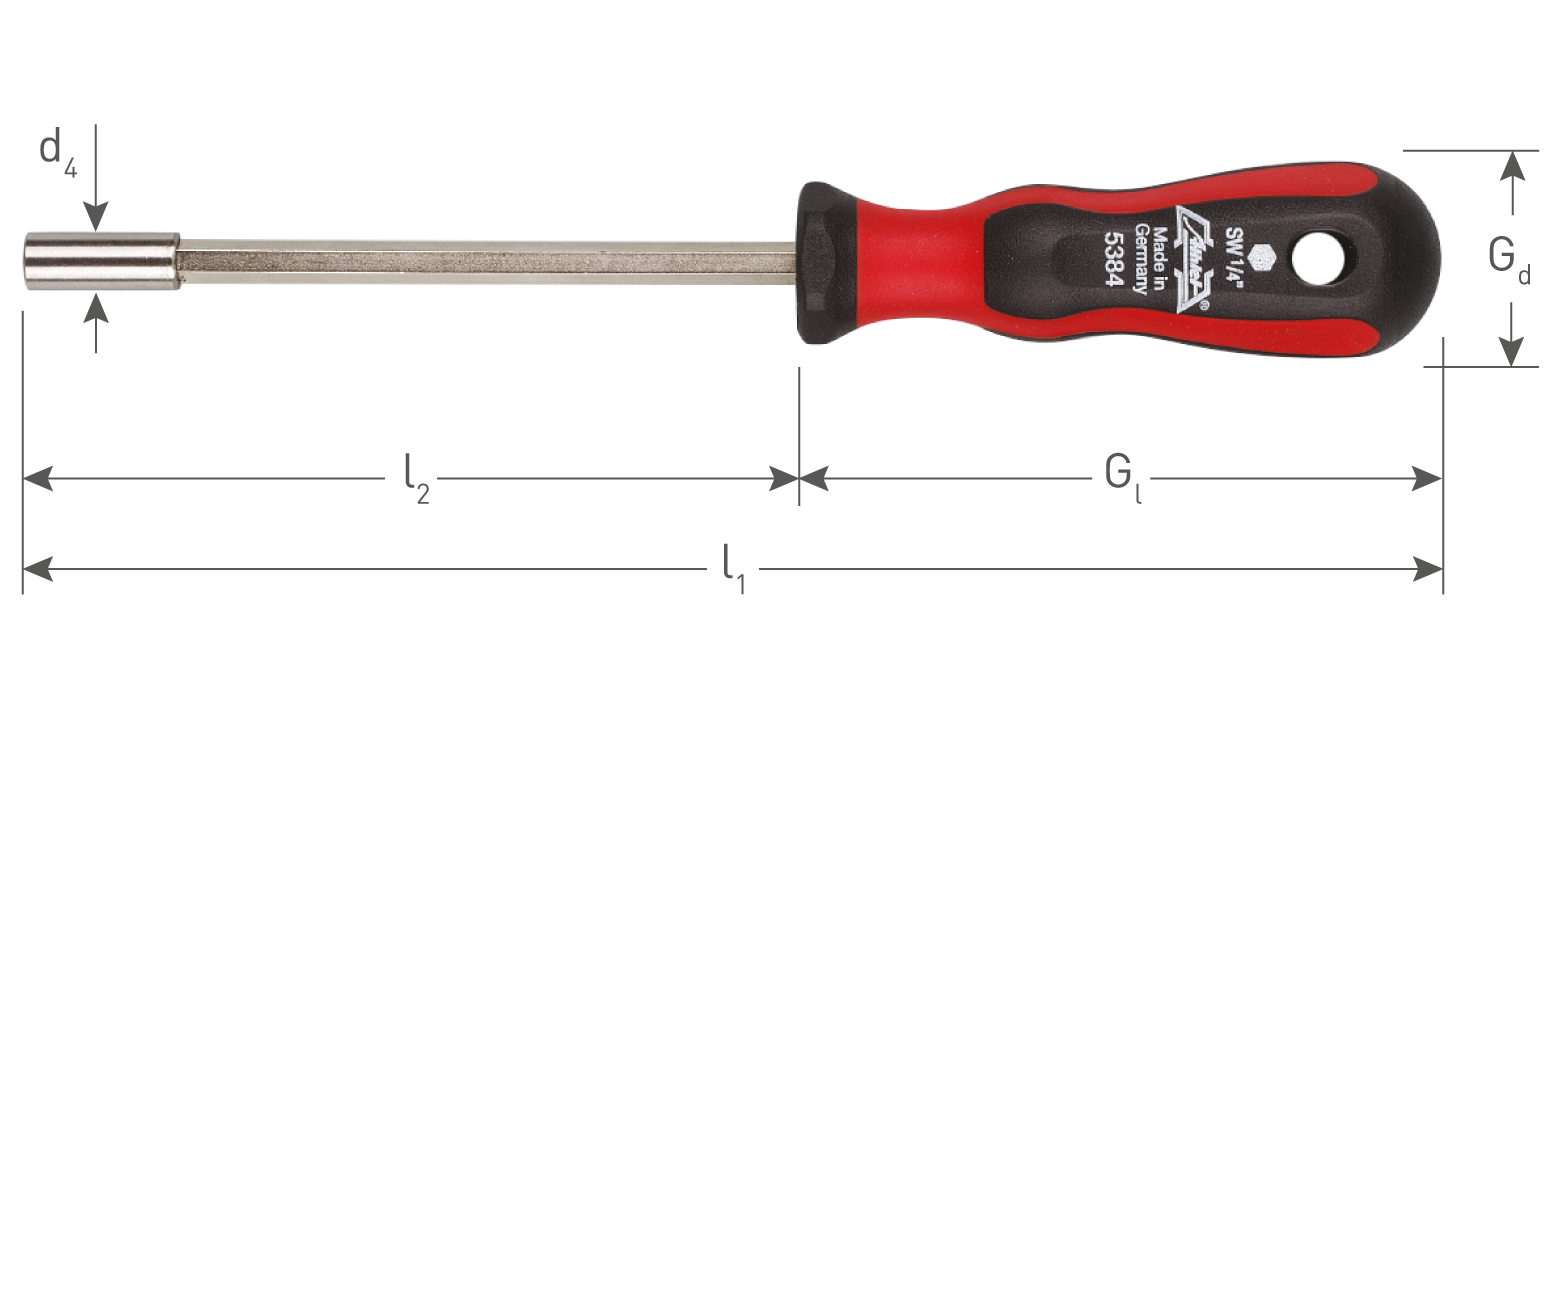 2C-Bit screwdriver, magnetic